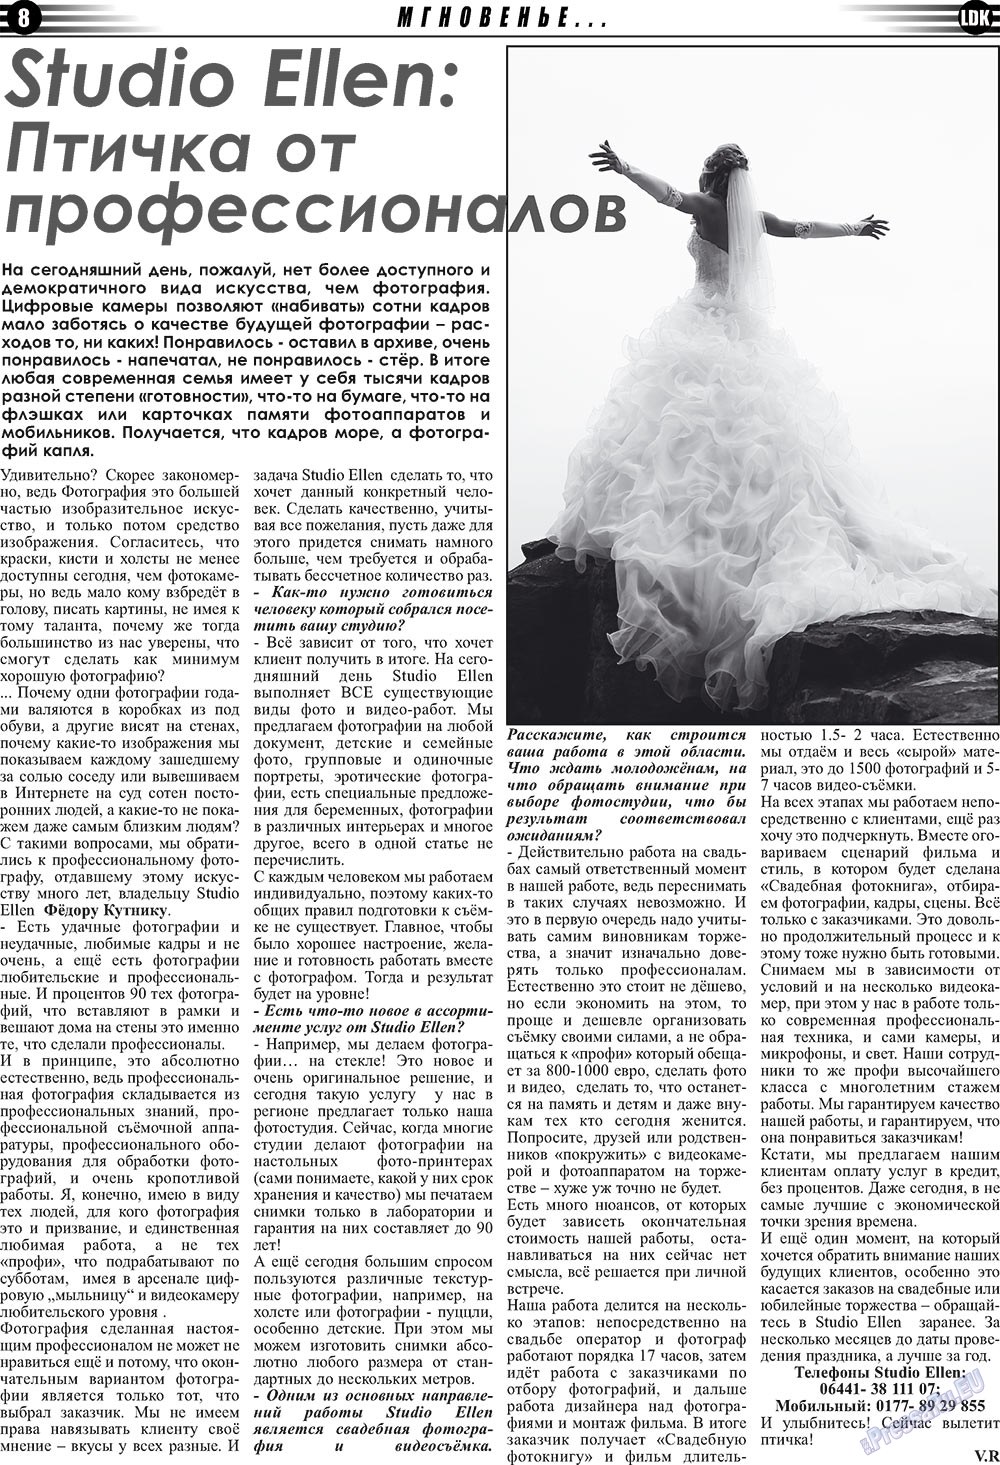 LDK по-русски, газета. 2009 №12 стр.8